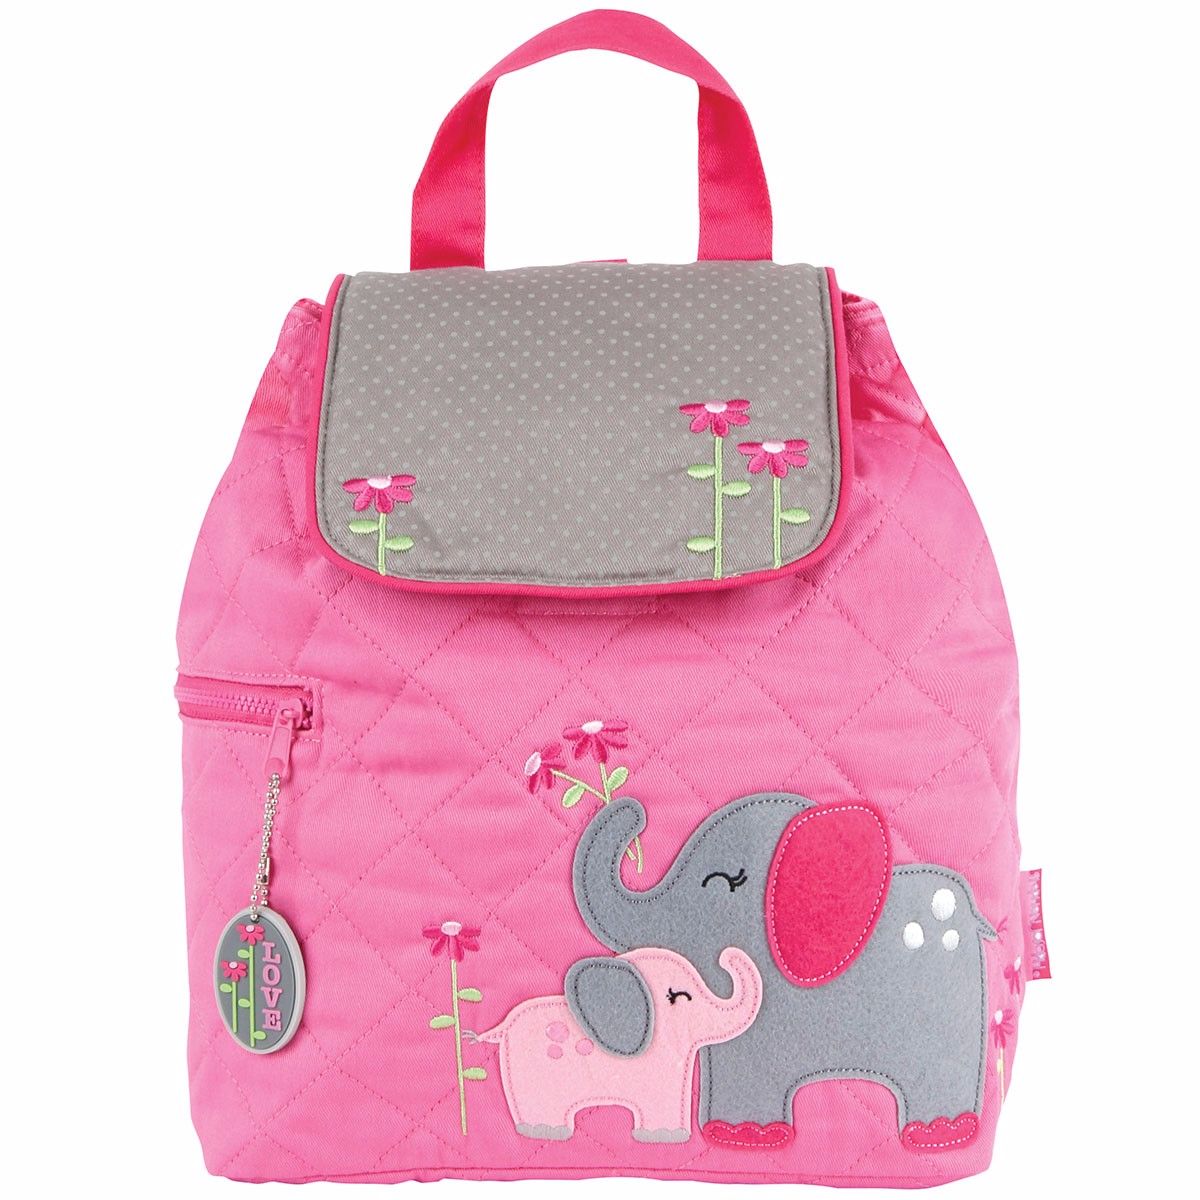 Personalised elephant backpack